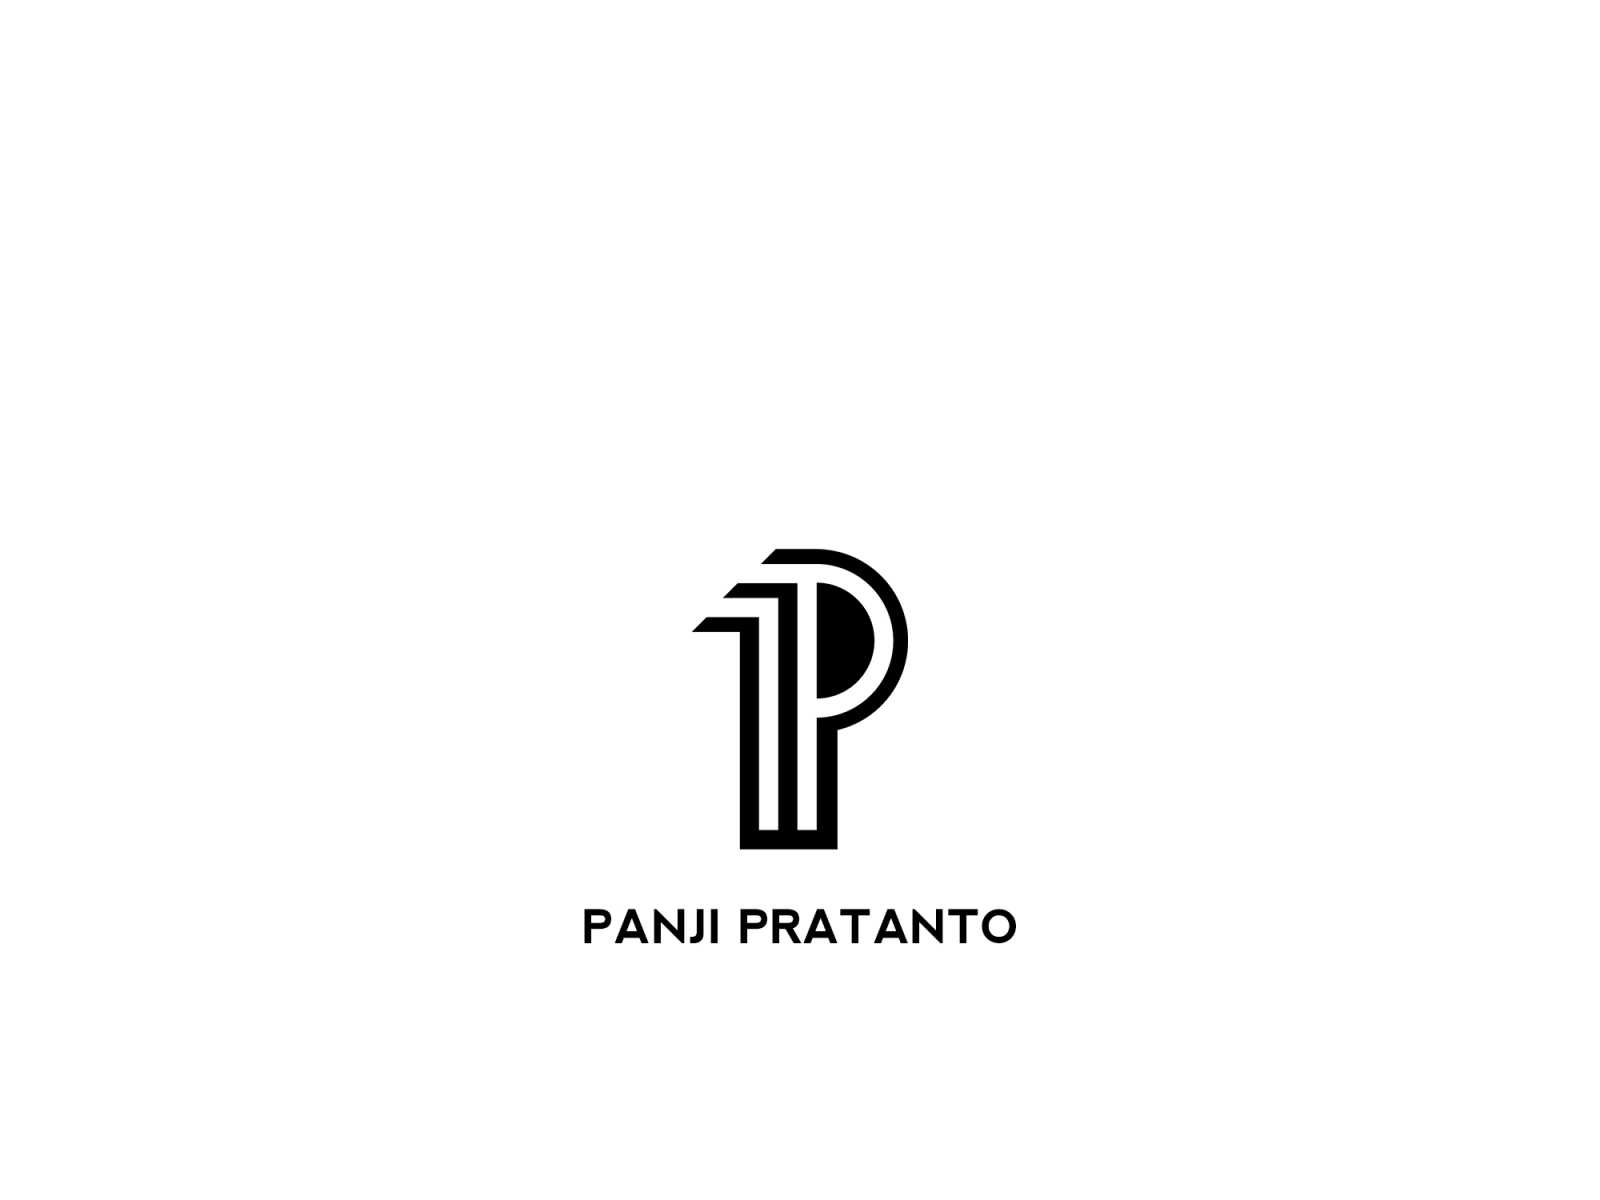 LOGO NAME - PANJI PRATANTO by Panji Pratanto on Dribbble